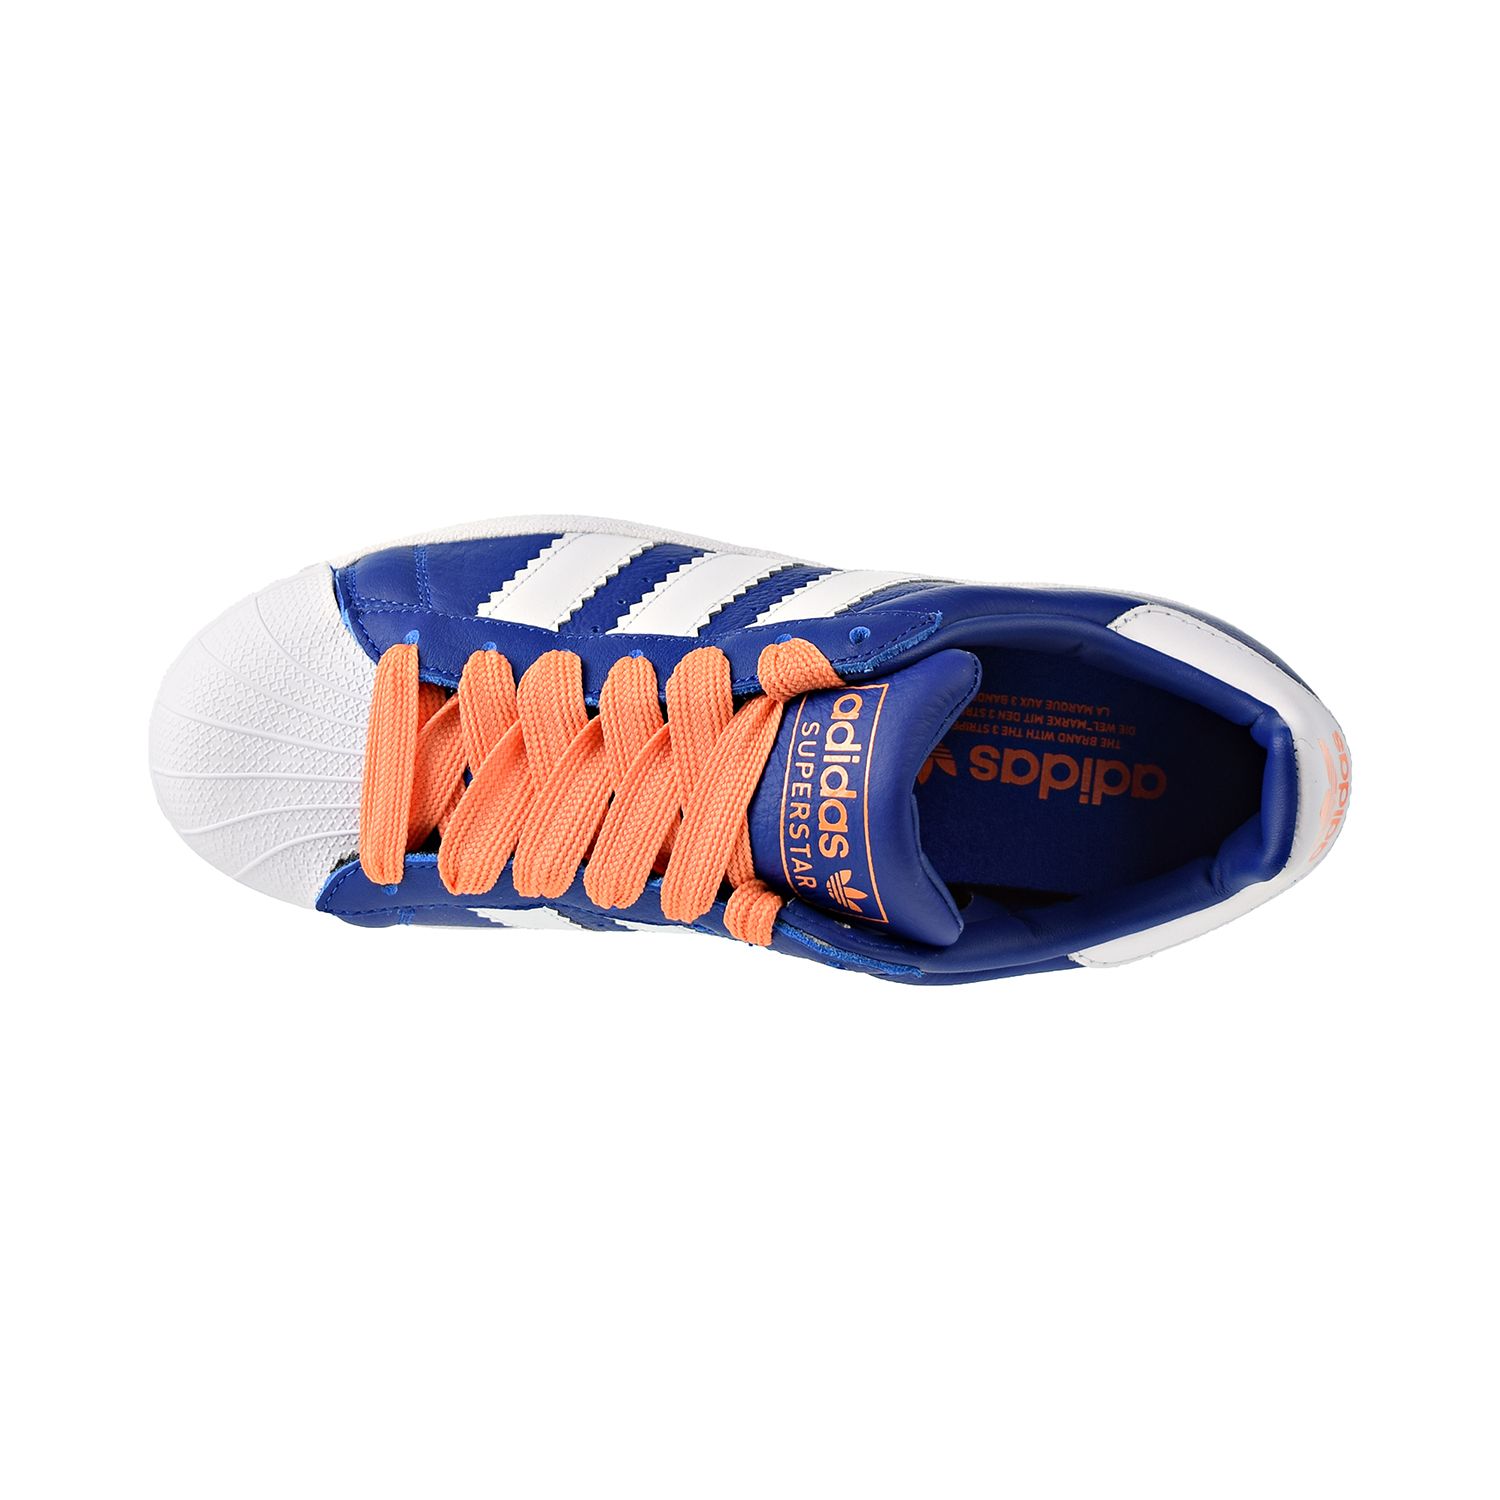 adidas superstar blue and orange